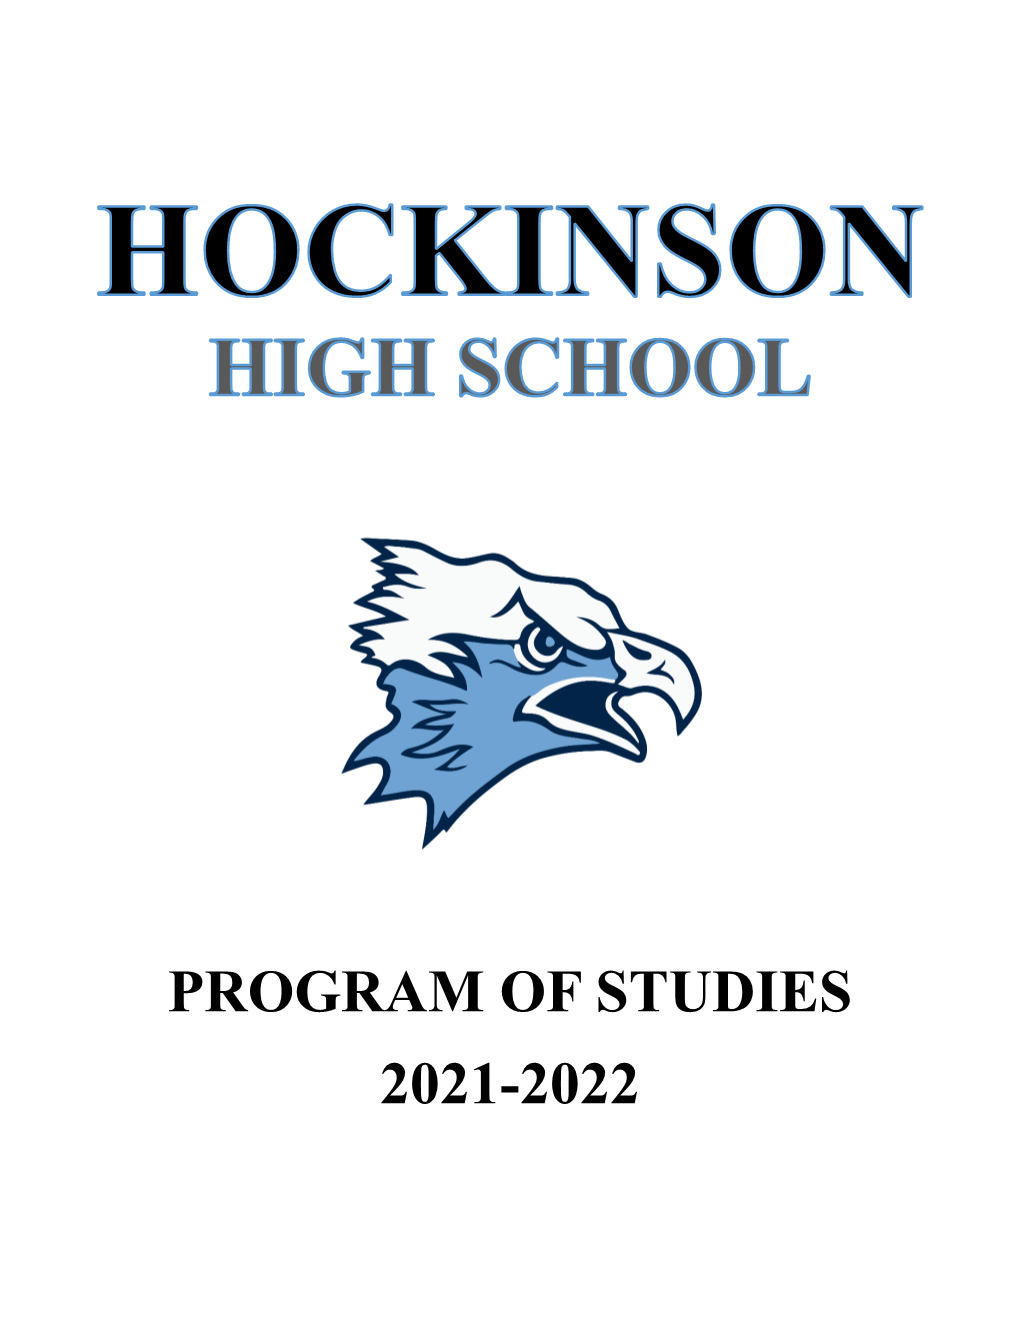 Program of Studies 2021-2022